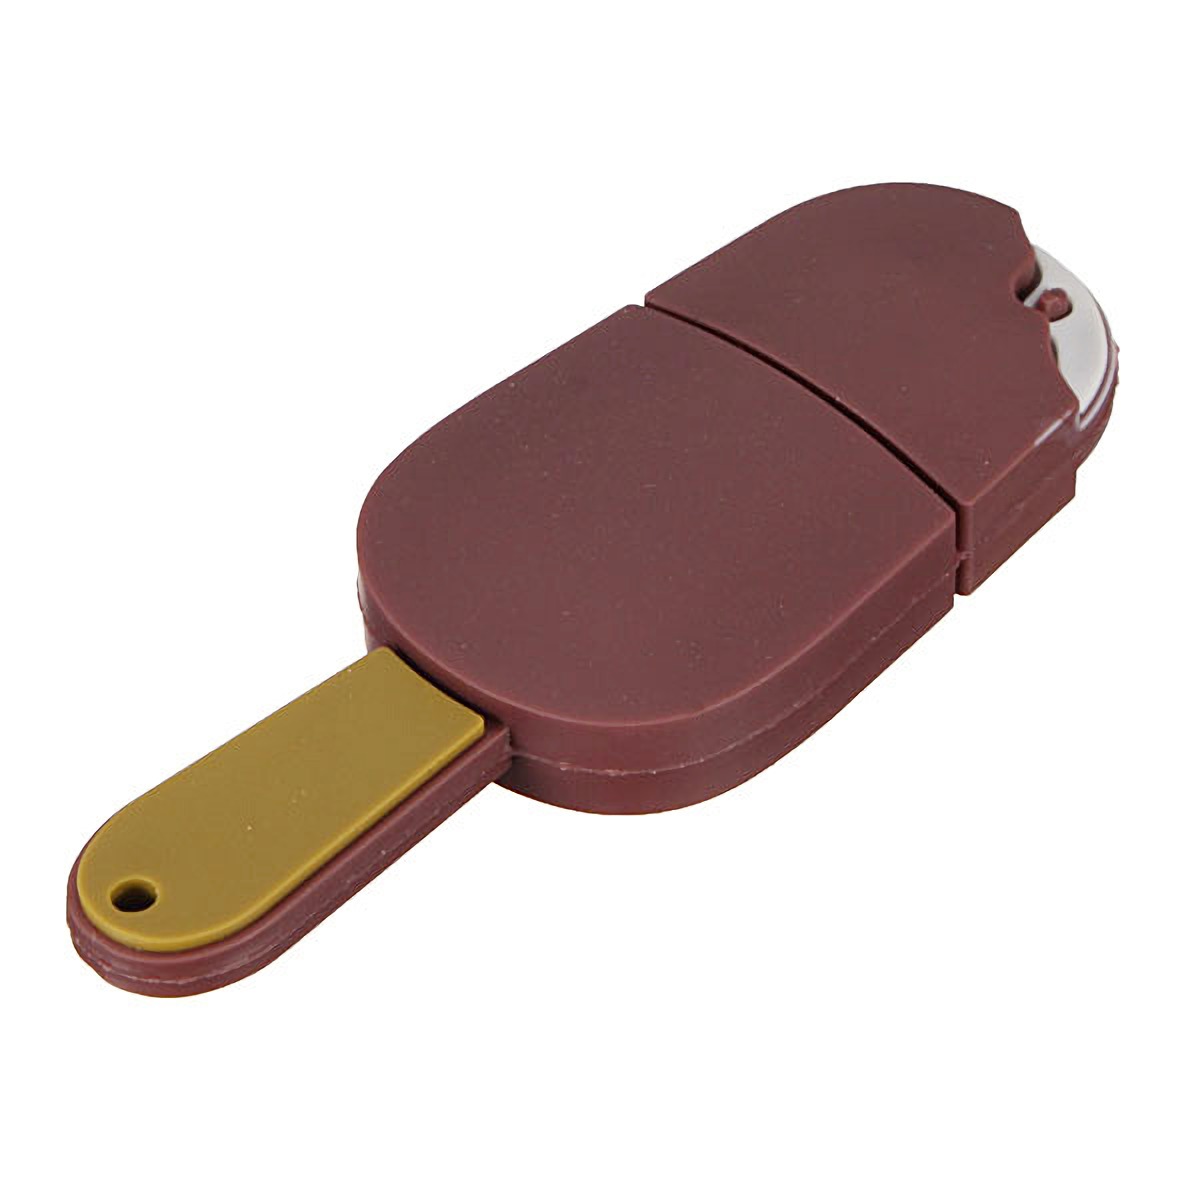 16GB-USB20-Chocolate-Ice-Cream-Model-Flash-Drive-Memory-U-Disk-961651-9